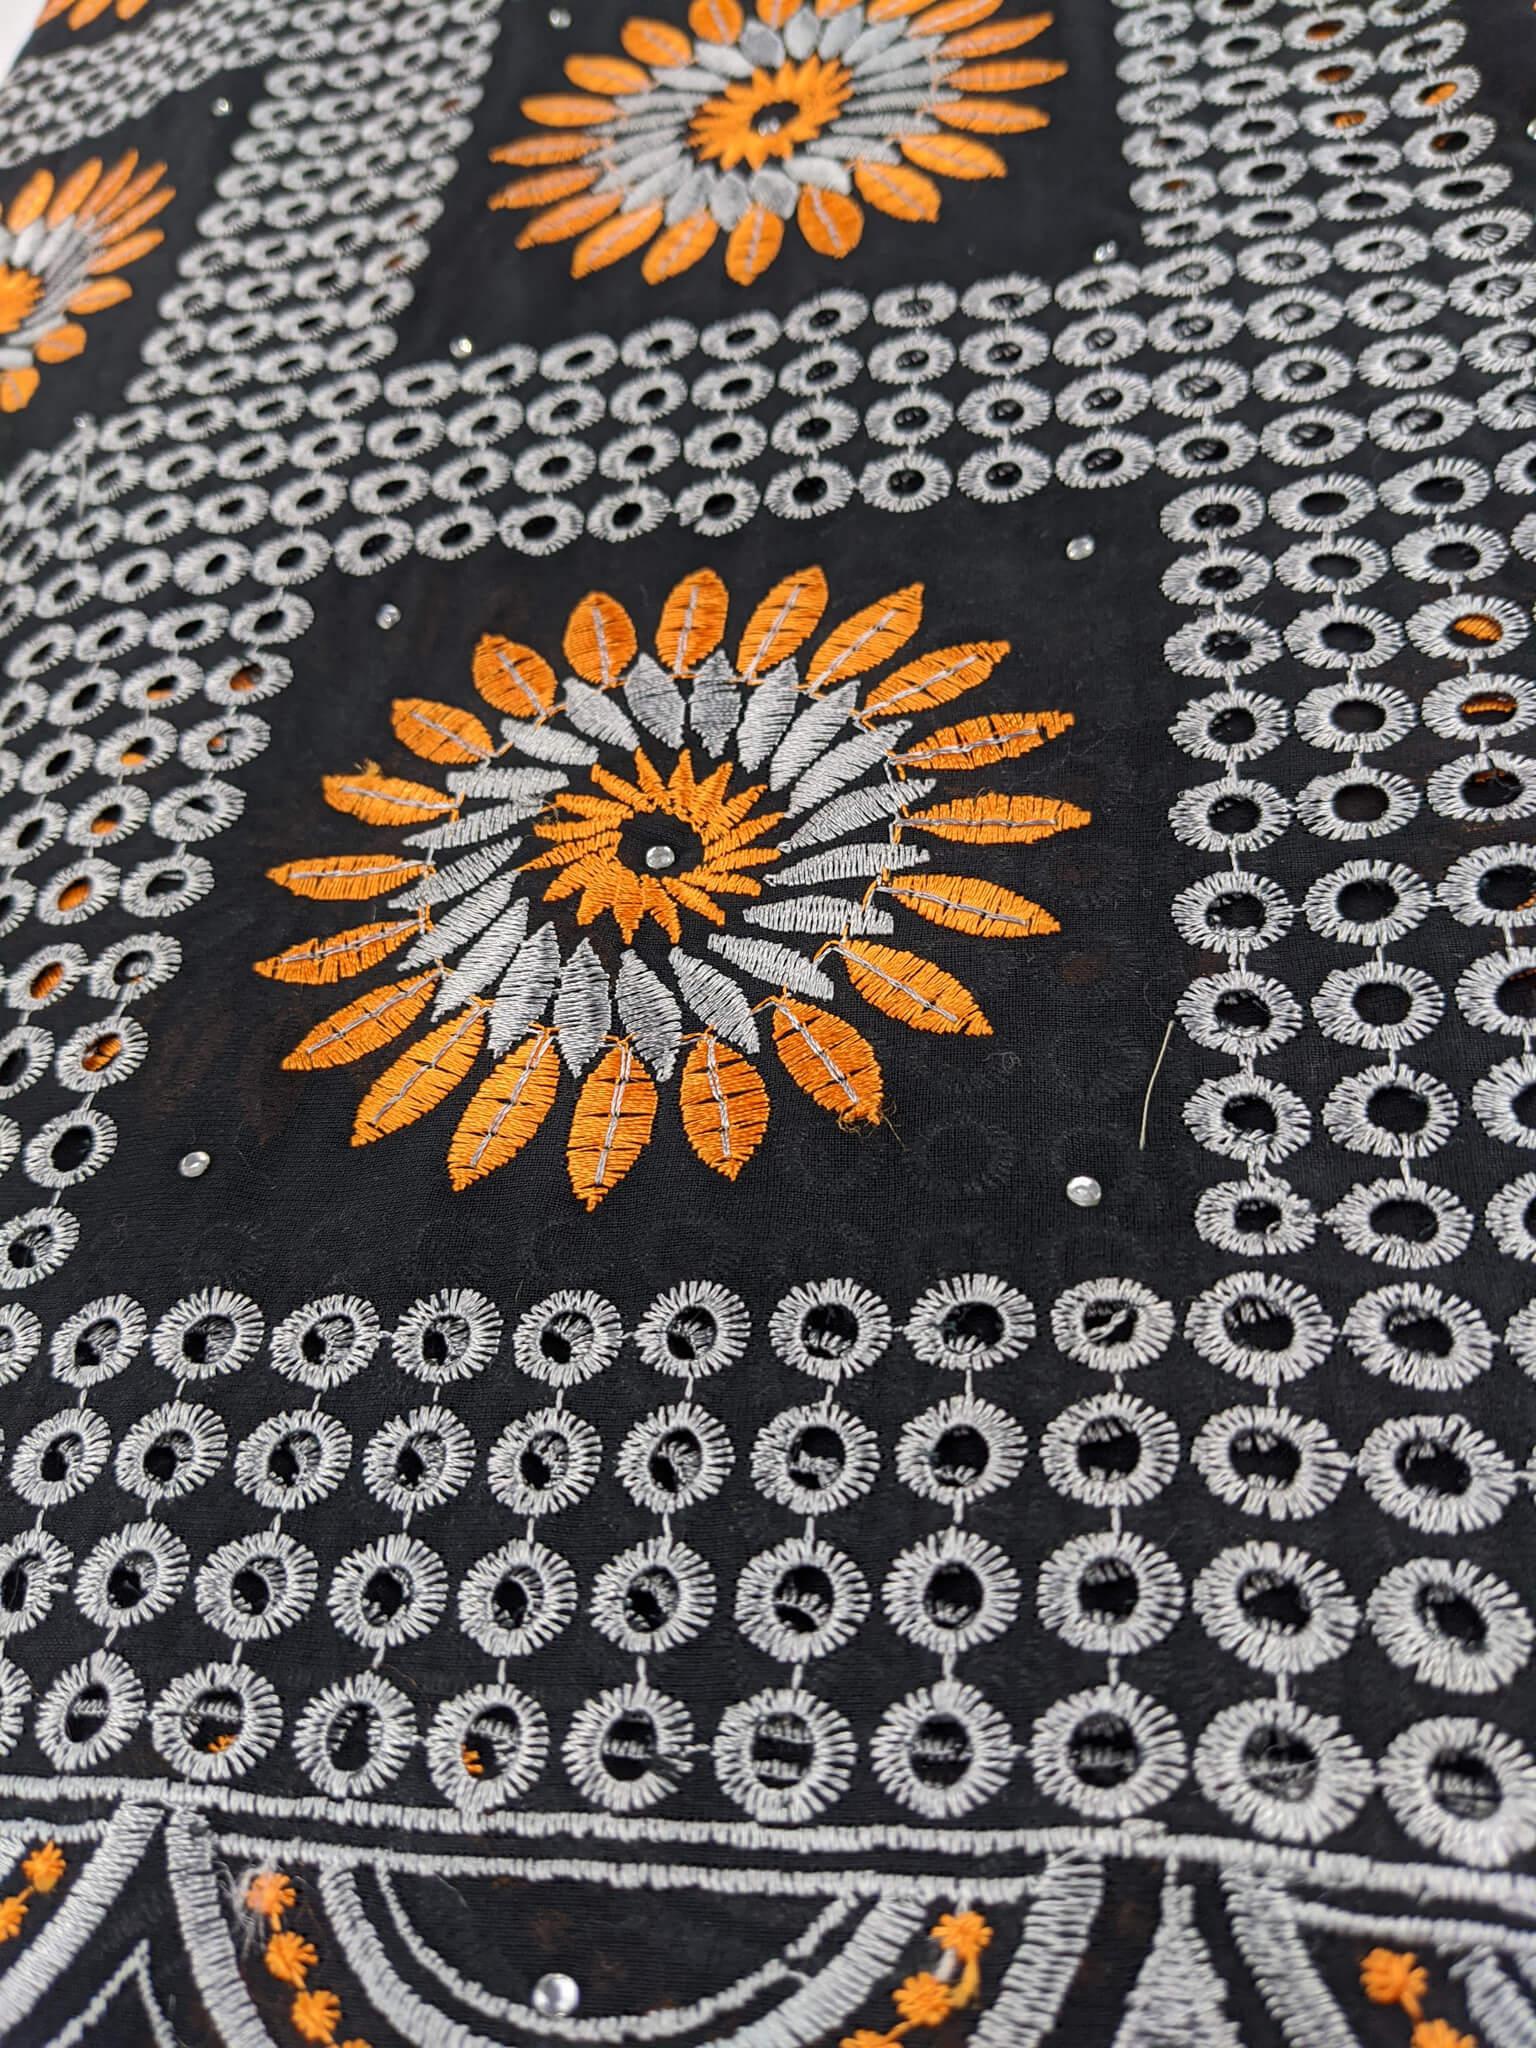 Black, White & Orange Cotton Lace